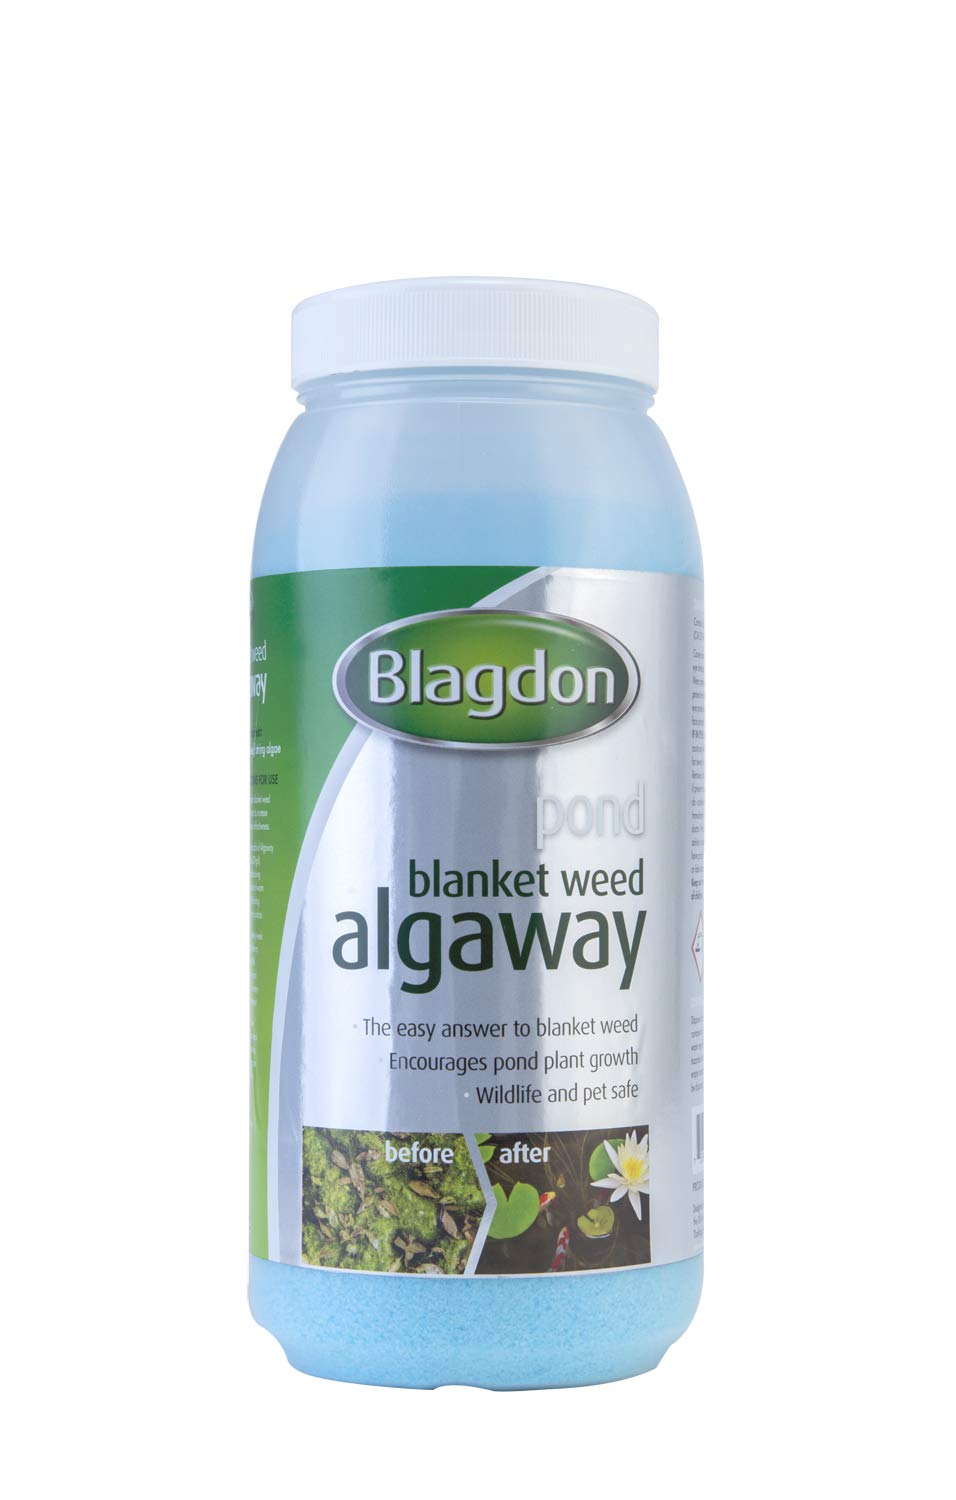 Blagdon Pond Blanketweed Algaway - Small 623g